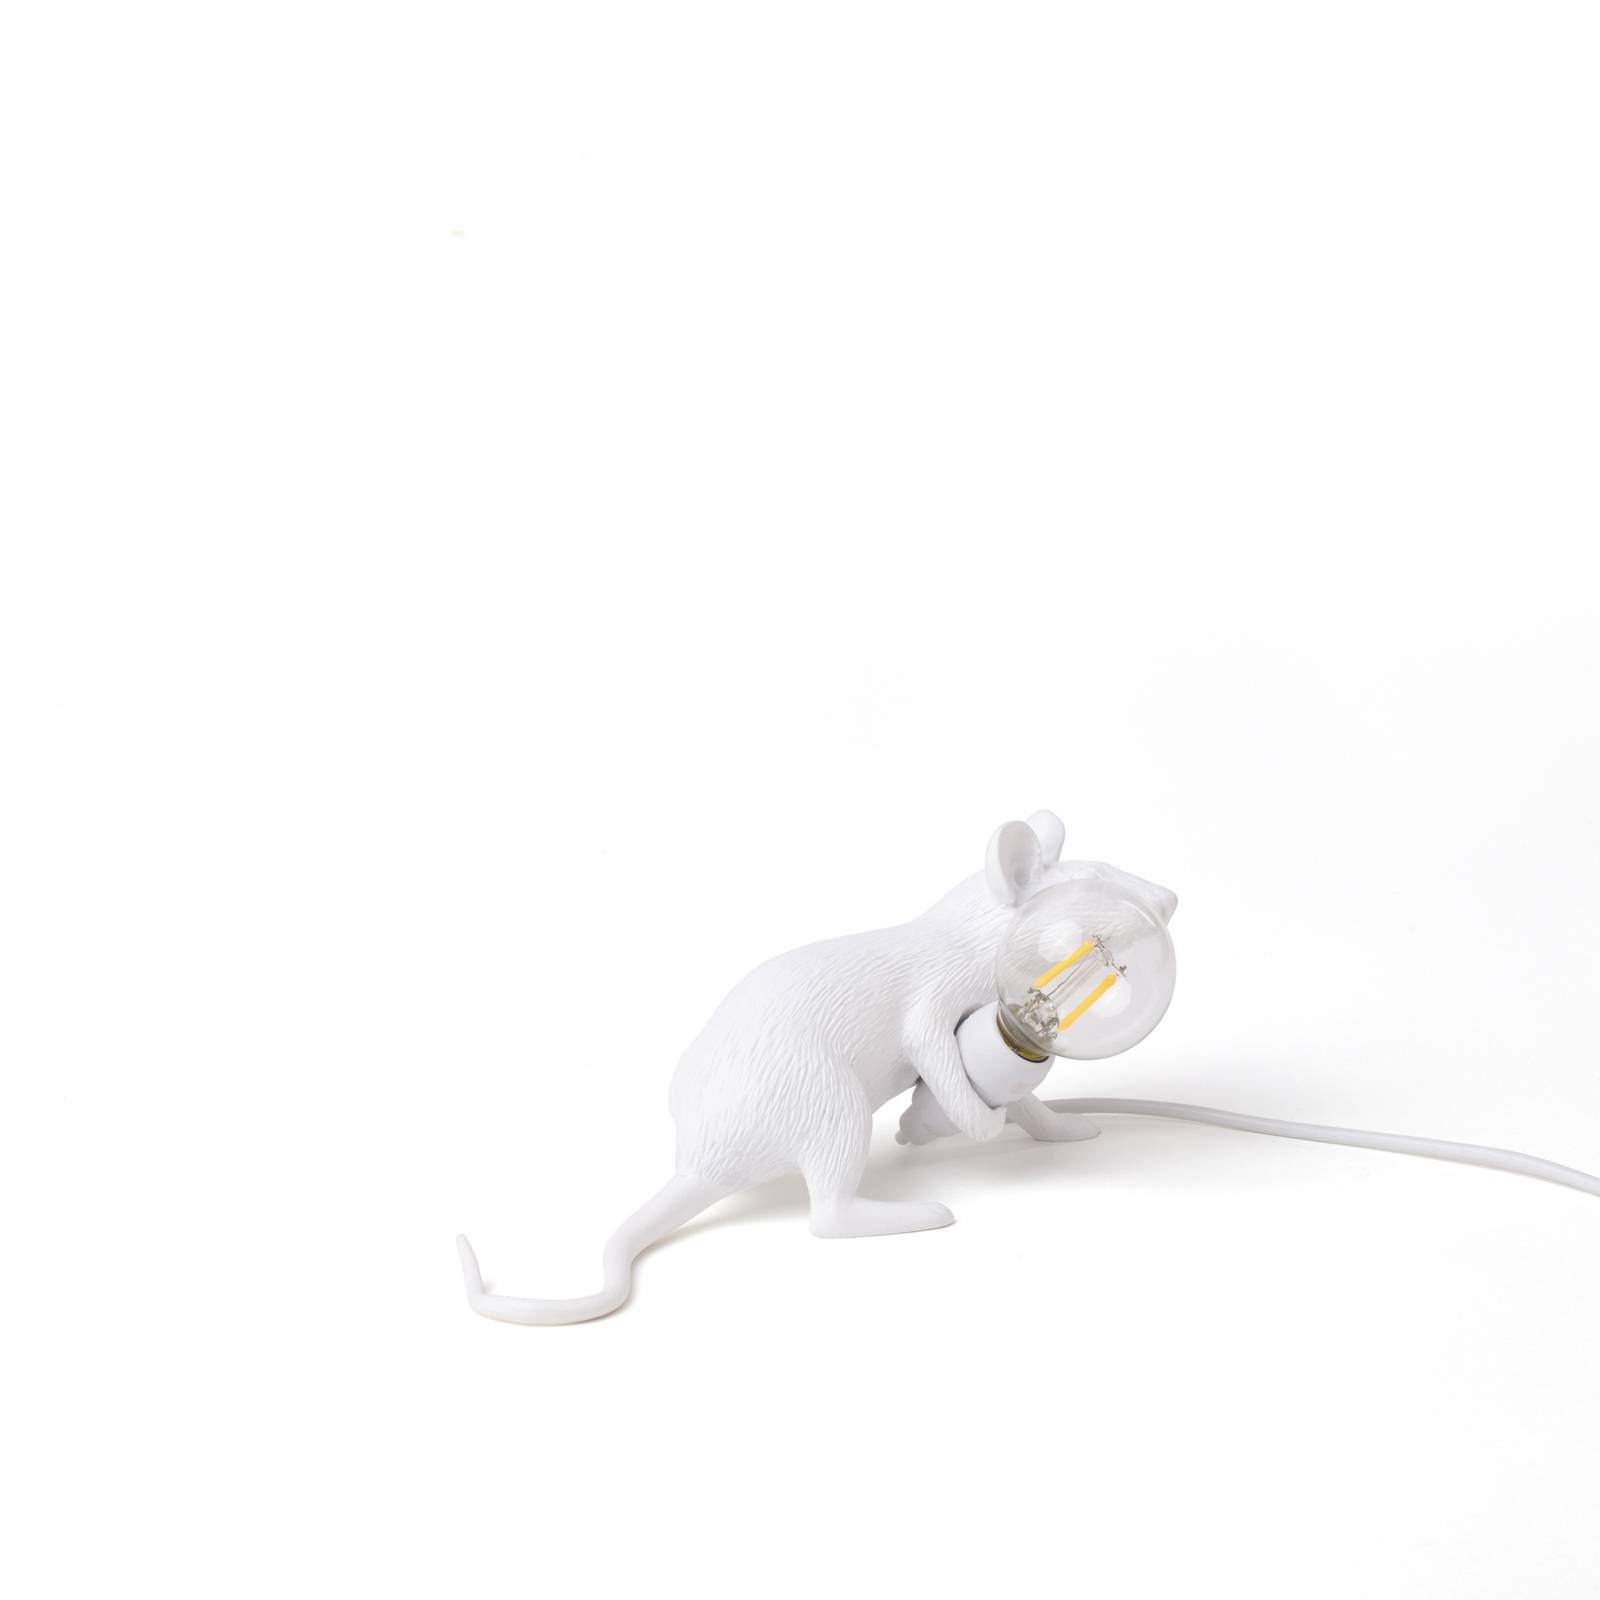 SELETTI Lampe déco LED Mouse Lamp USB couchée blanche